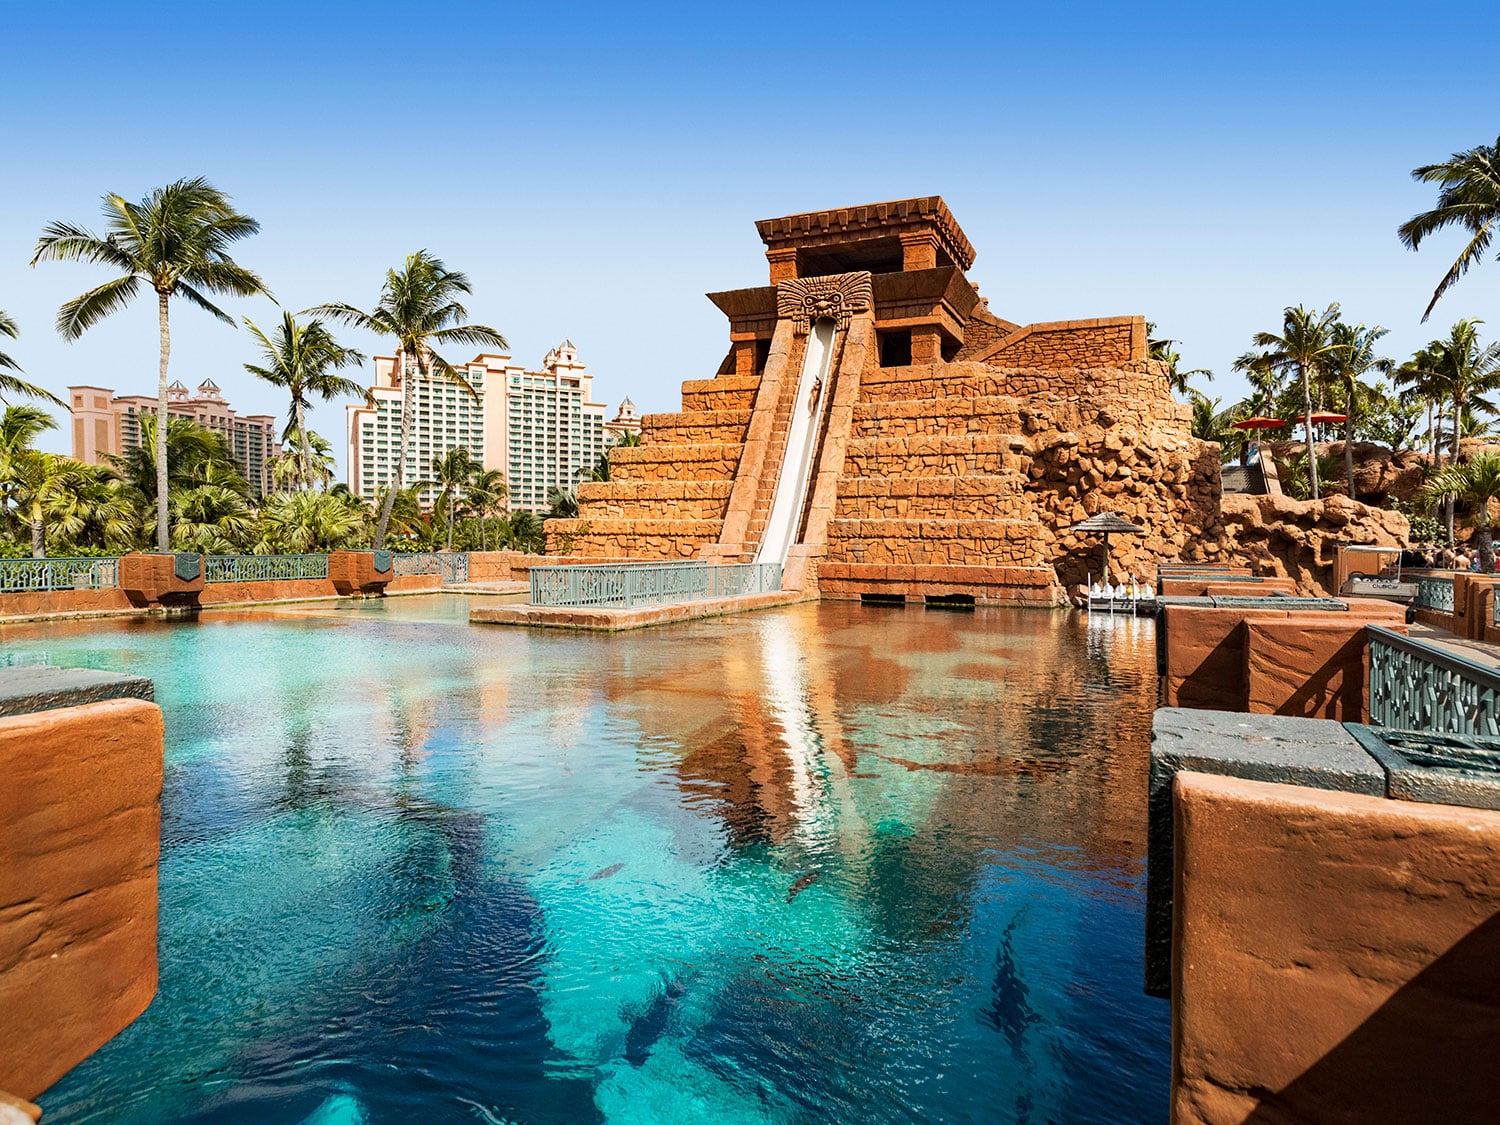 The Mayan Temple water slide at the Atlantis Paradise Island beach resort.